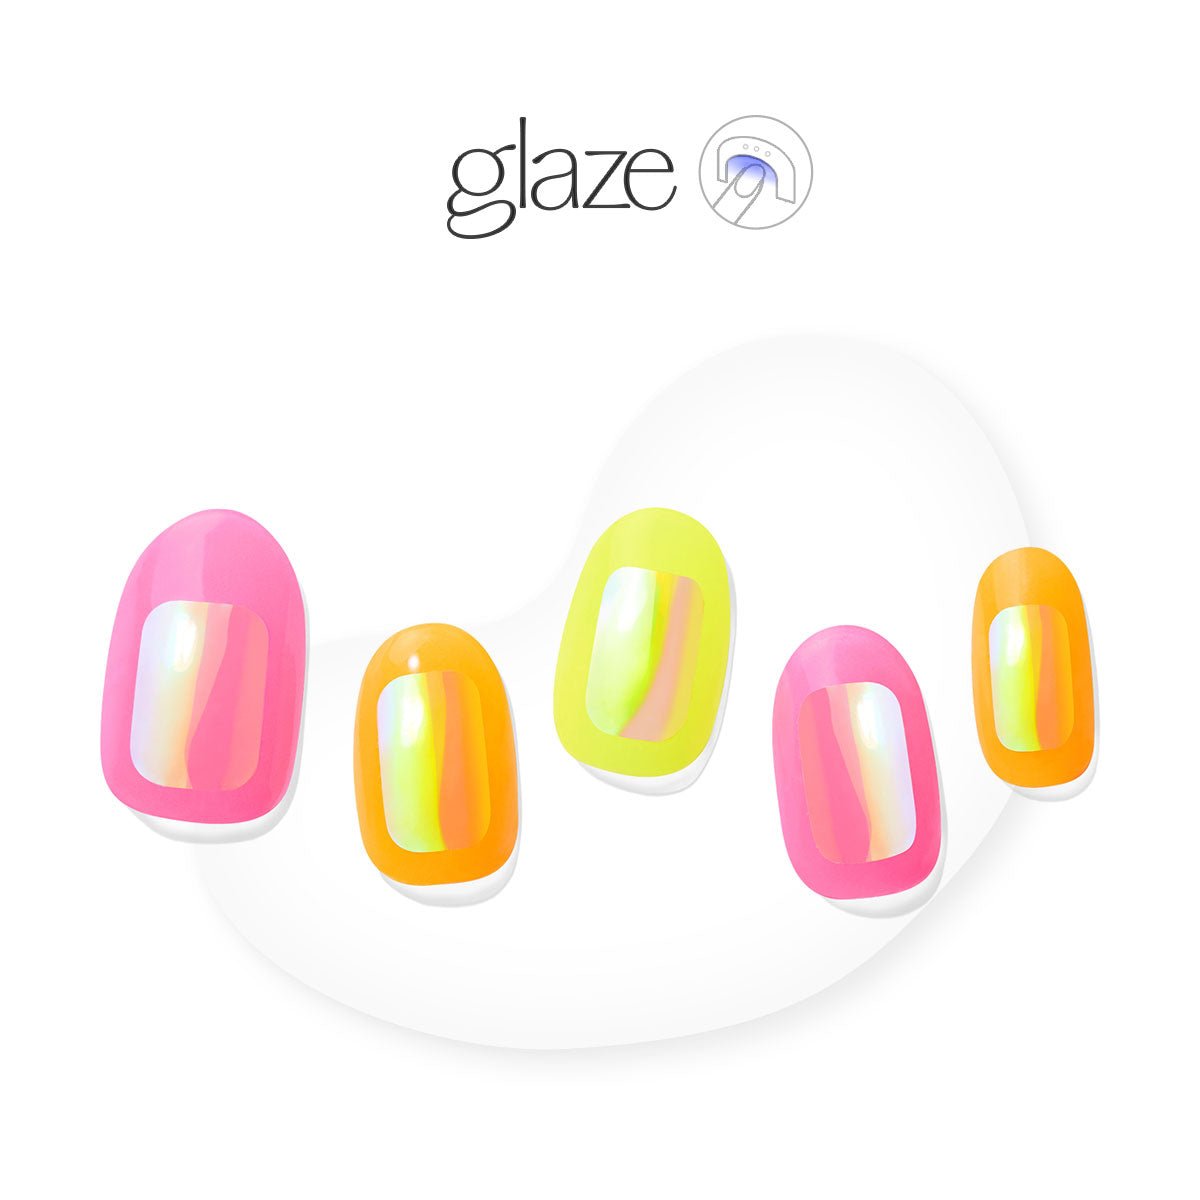 Neon Candy (Long) - Glaze Art - Manicure - Dashing Diva Singapore